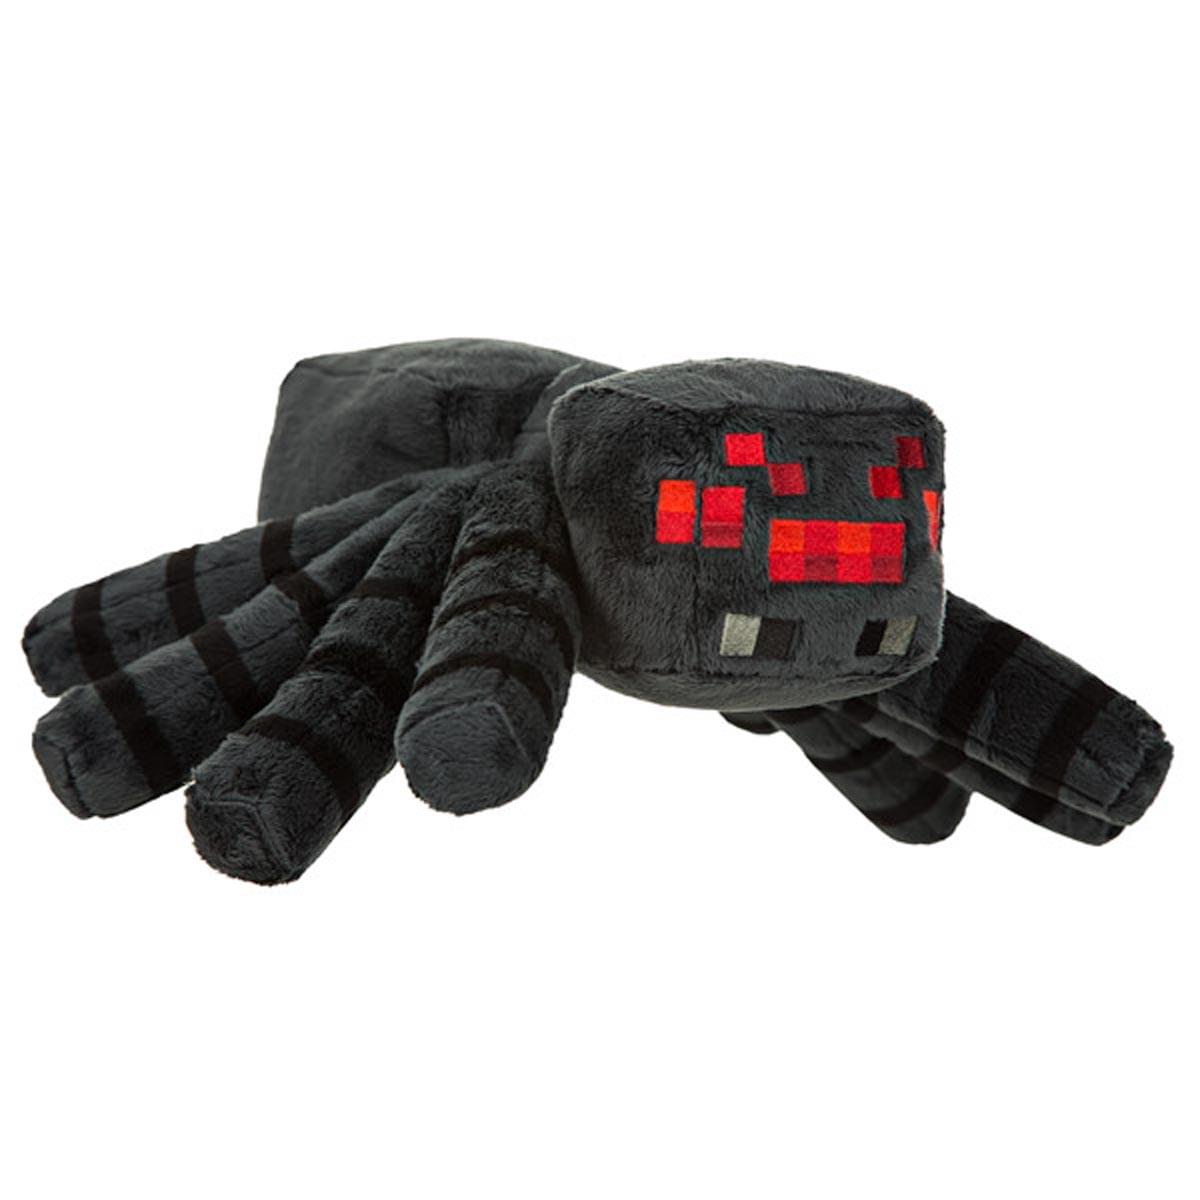 Minecraft 13" Large Spider Plush